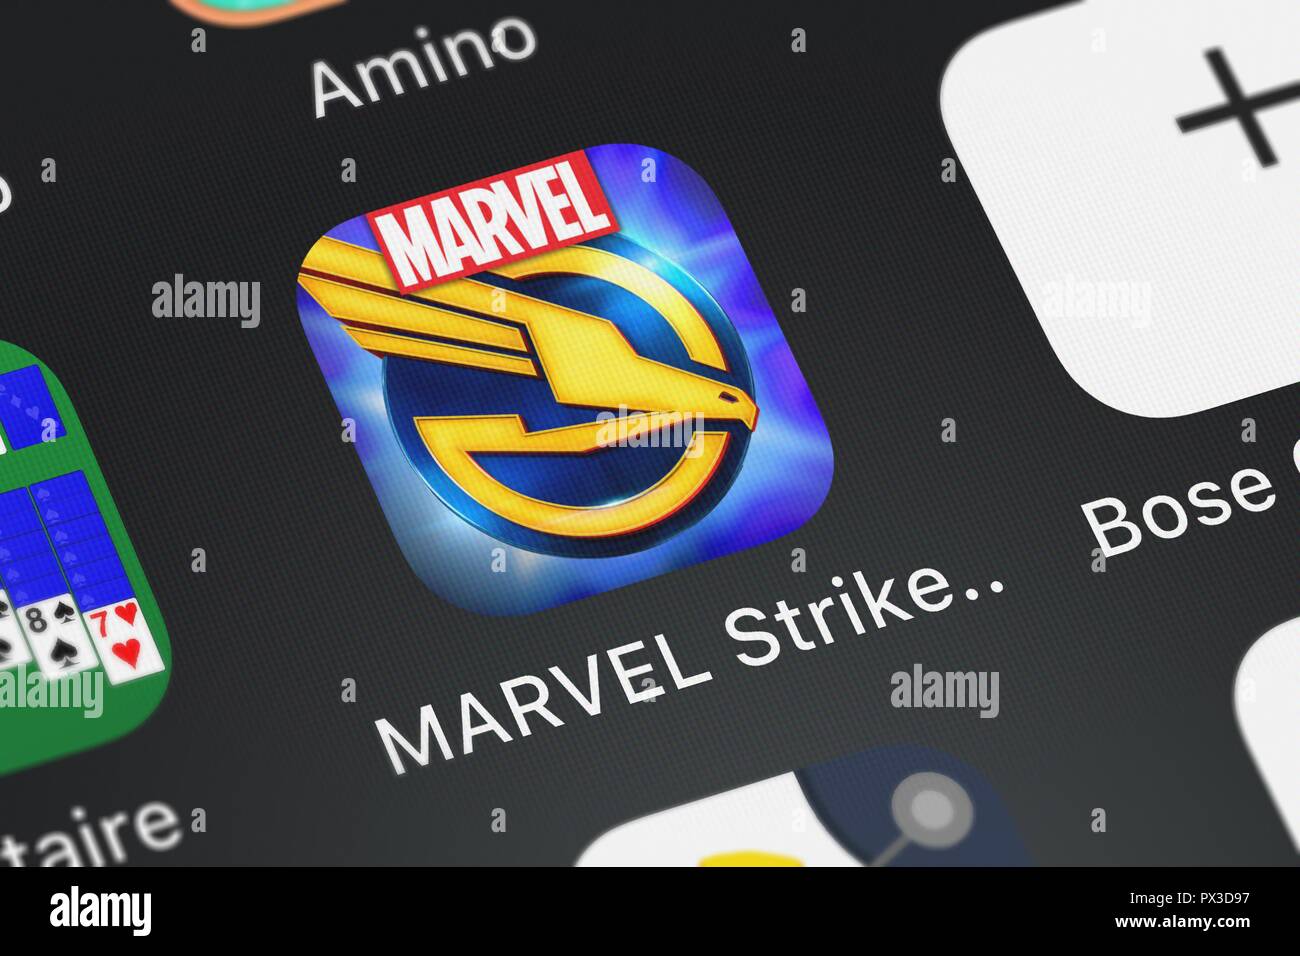 MARVEL Strike Force on the App Store